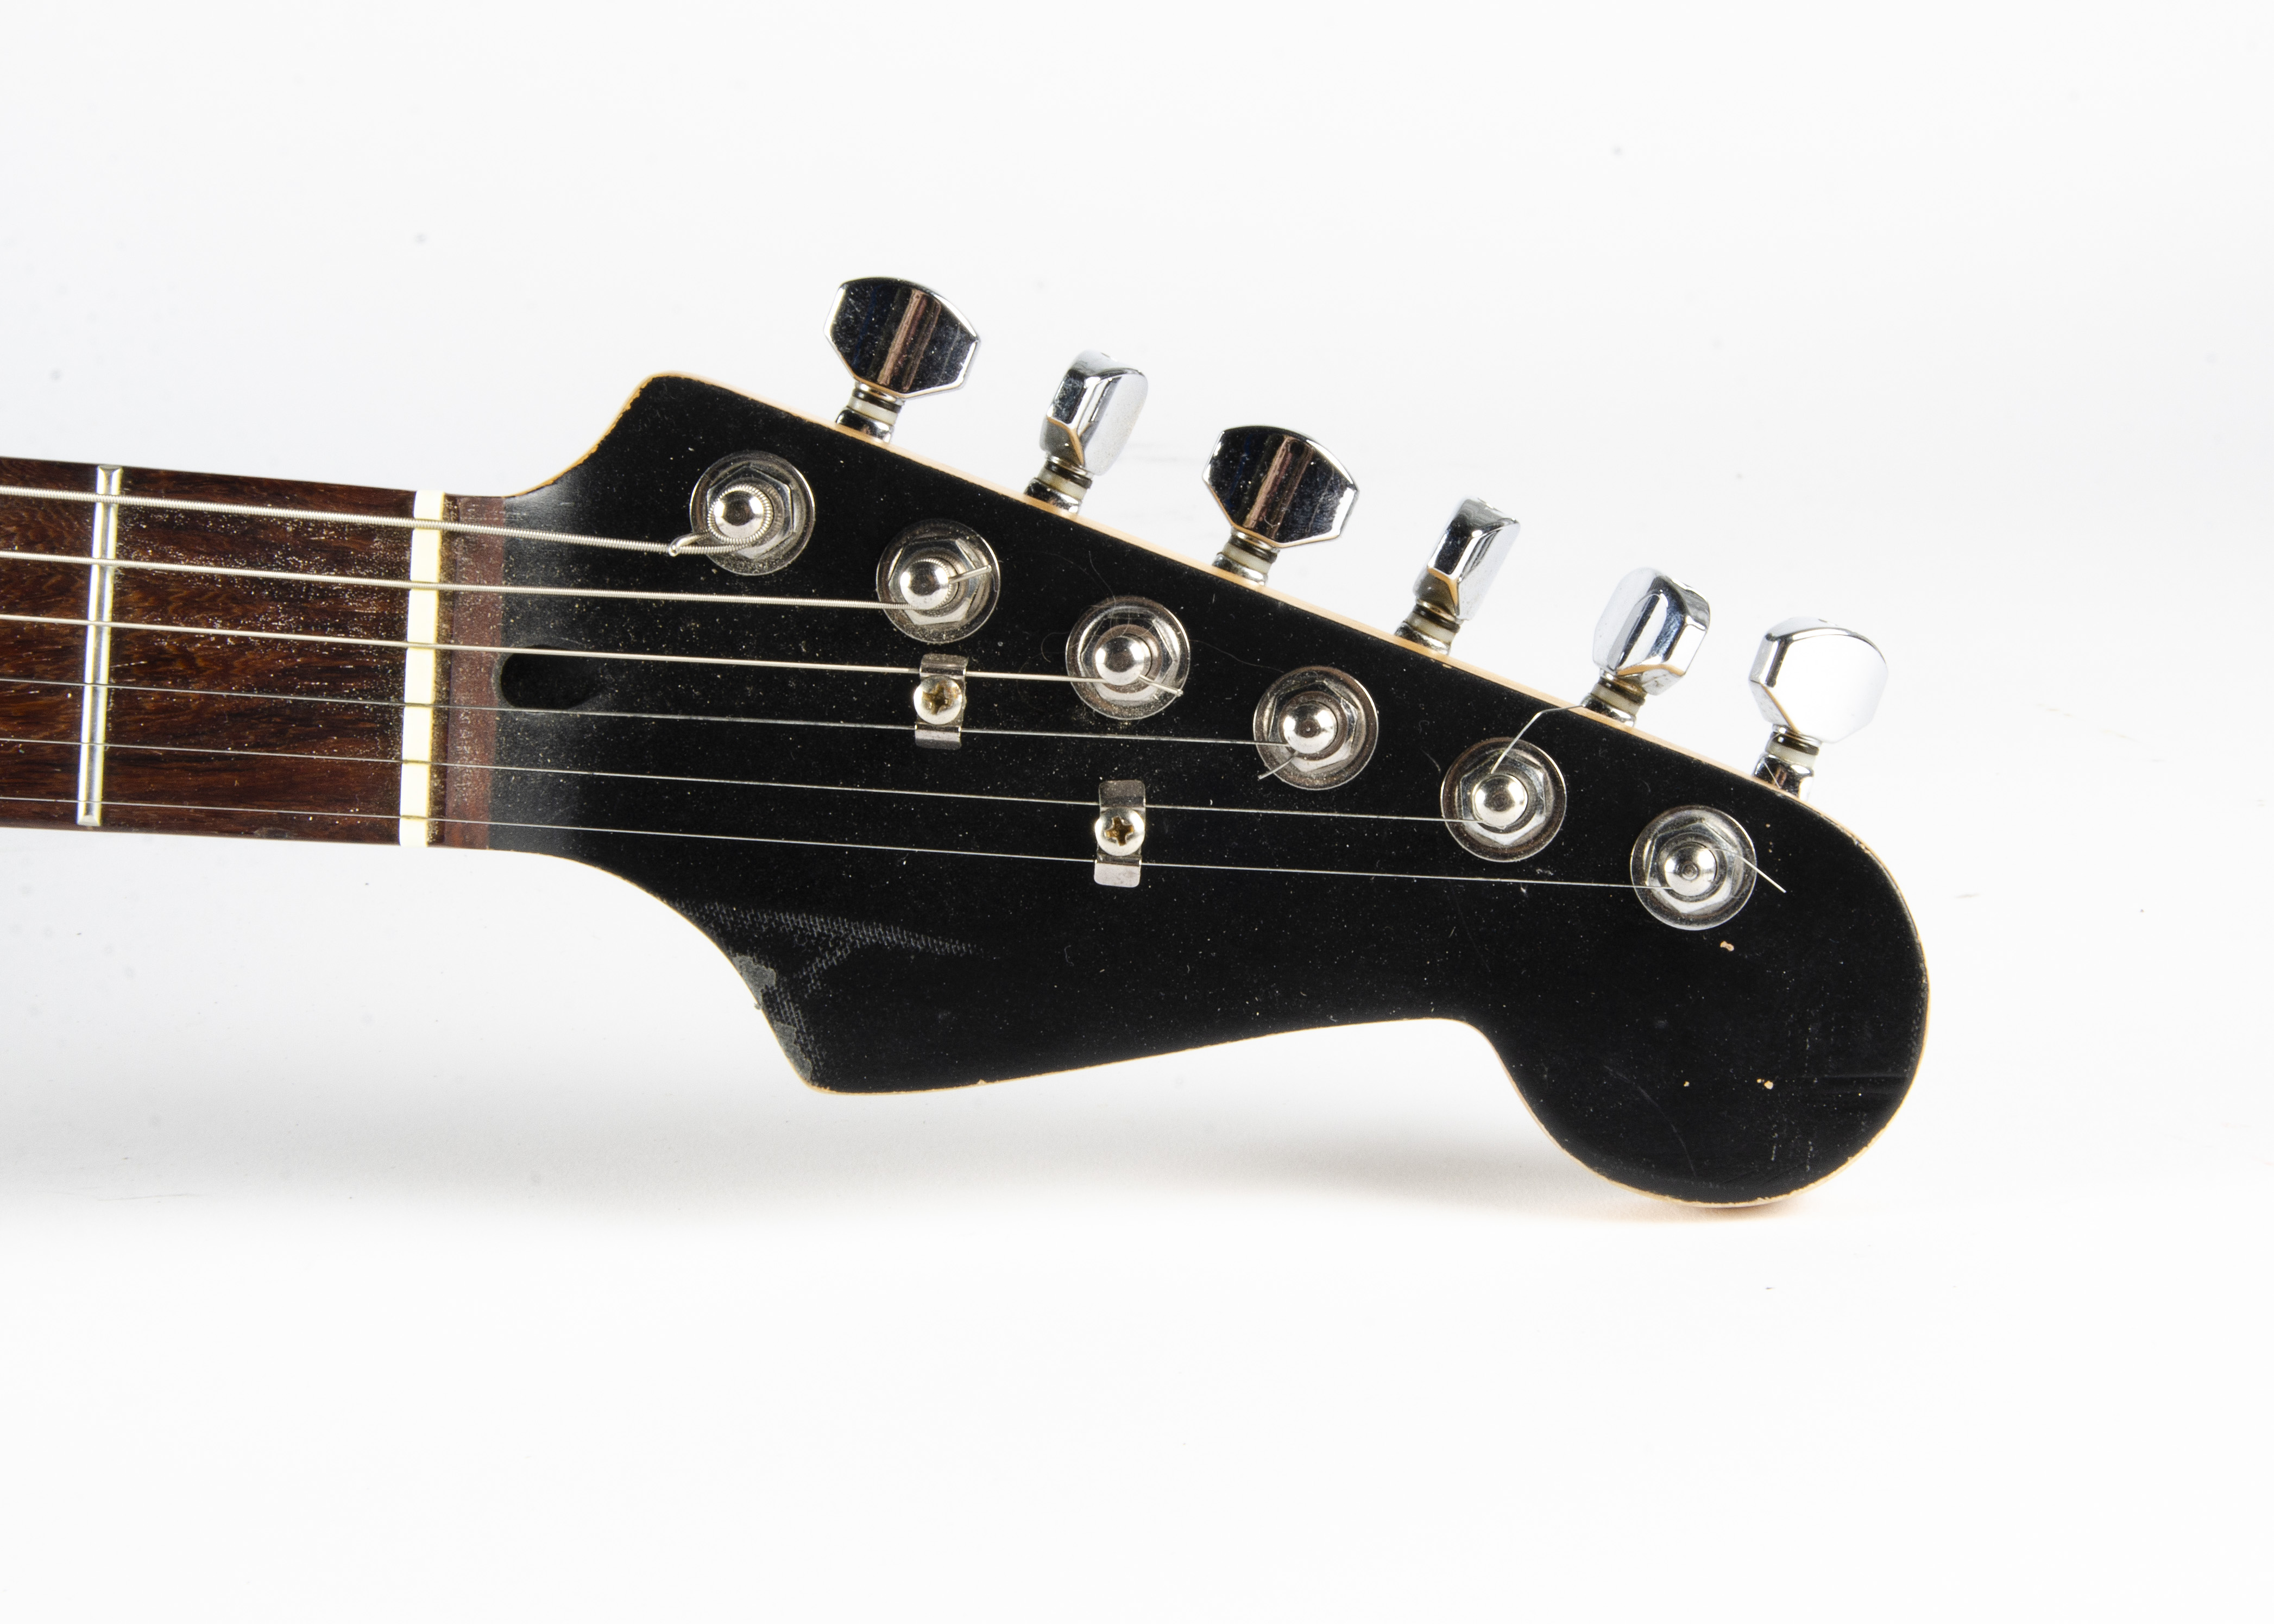 Violin-shaped guitar, Frazer custom violin guitar, brown varnish, various imperfections, frets - - Image 2 of 4